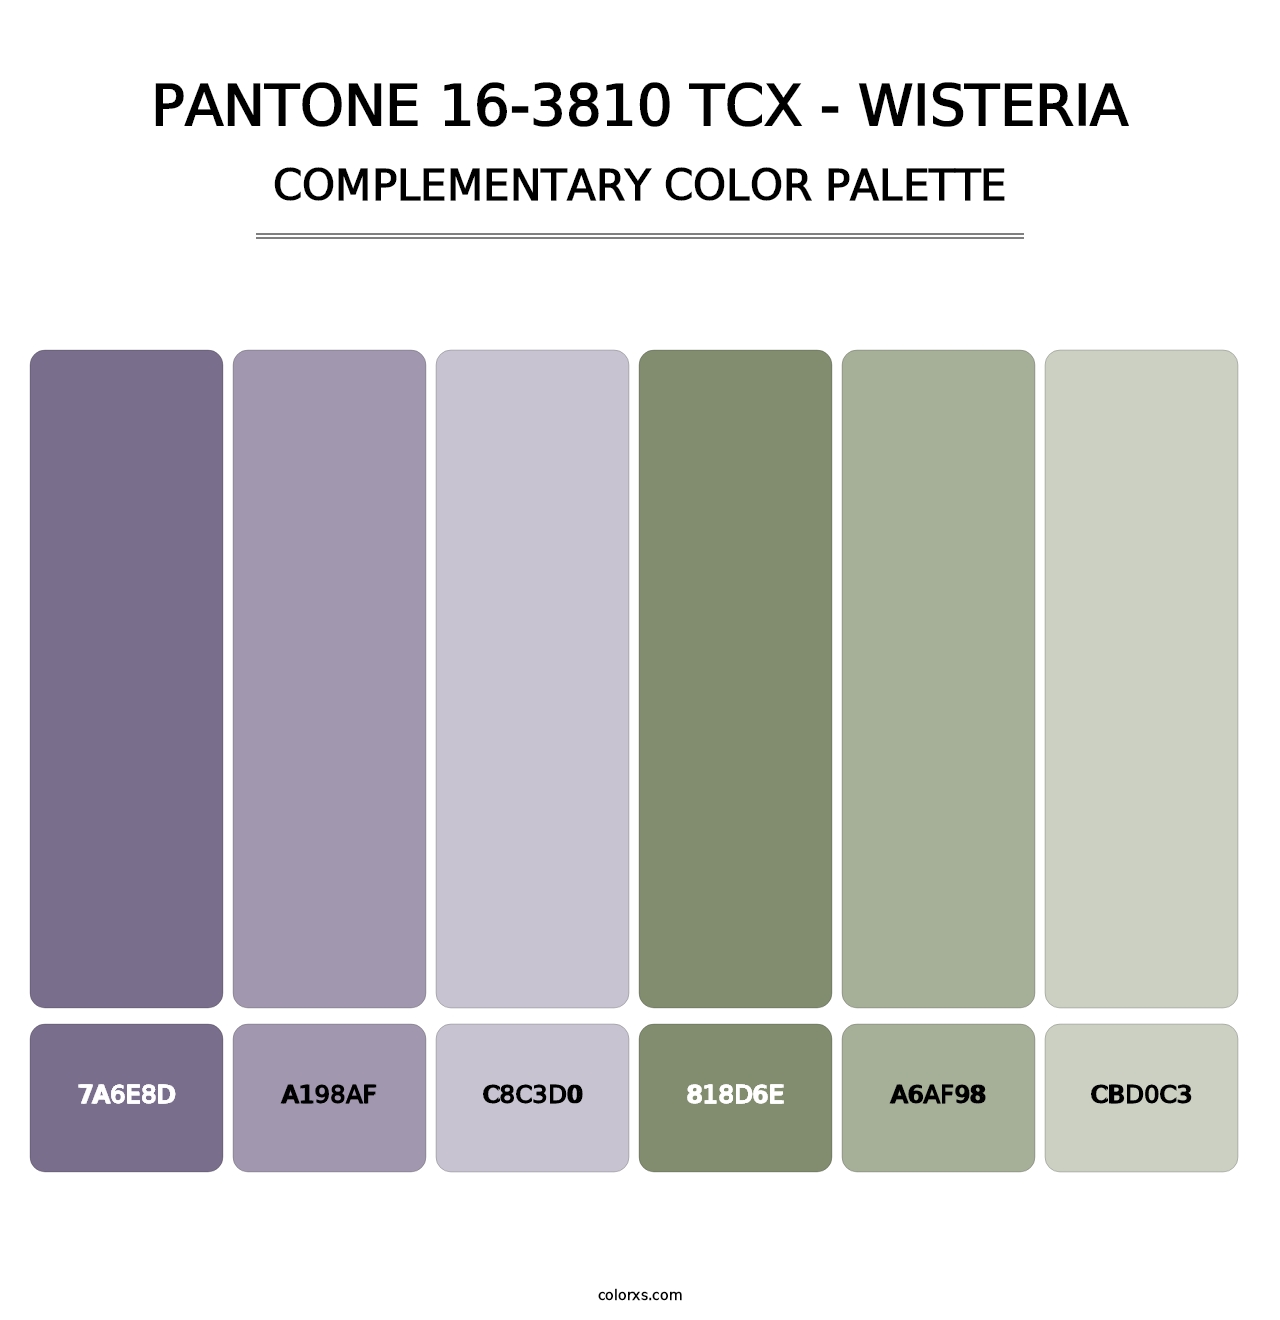 PANTONE 16-3810 TCX - Wisteria - Complementary Color Palette